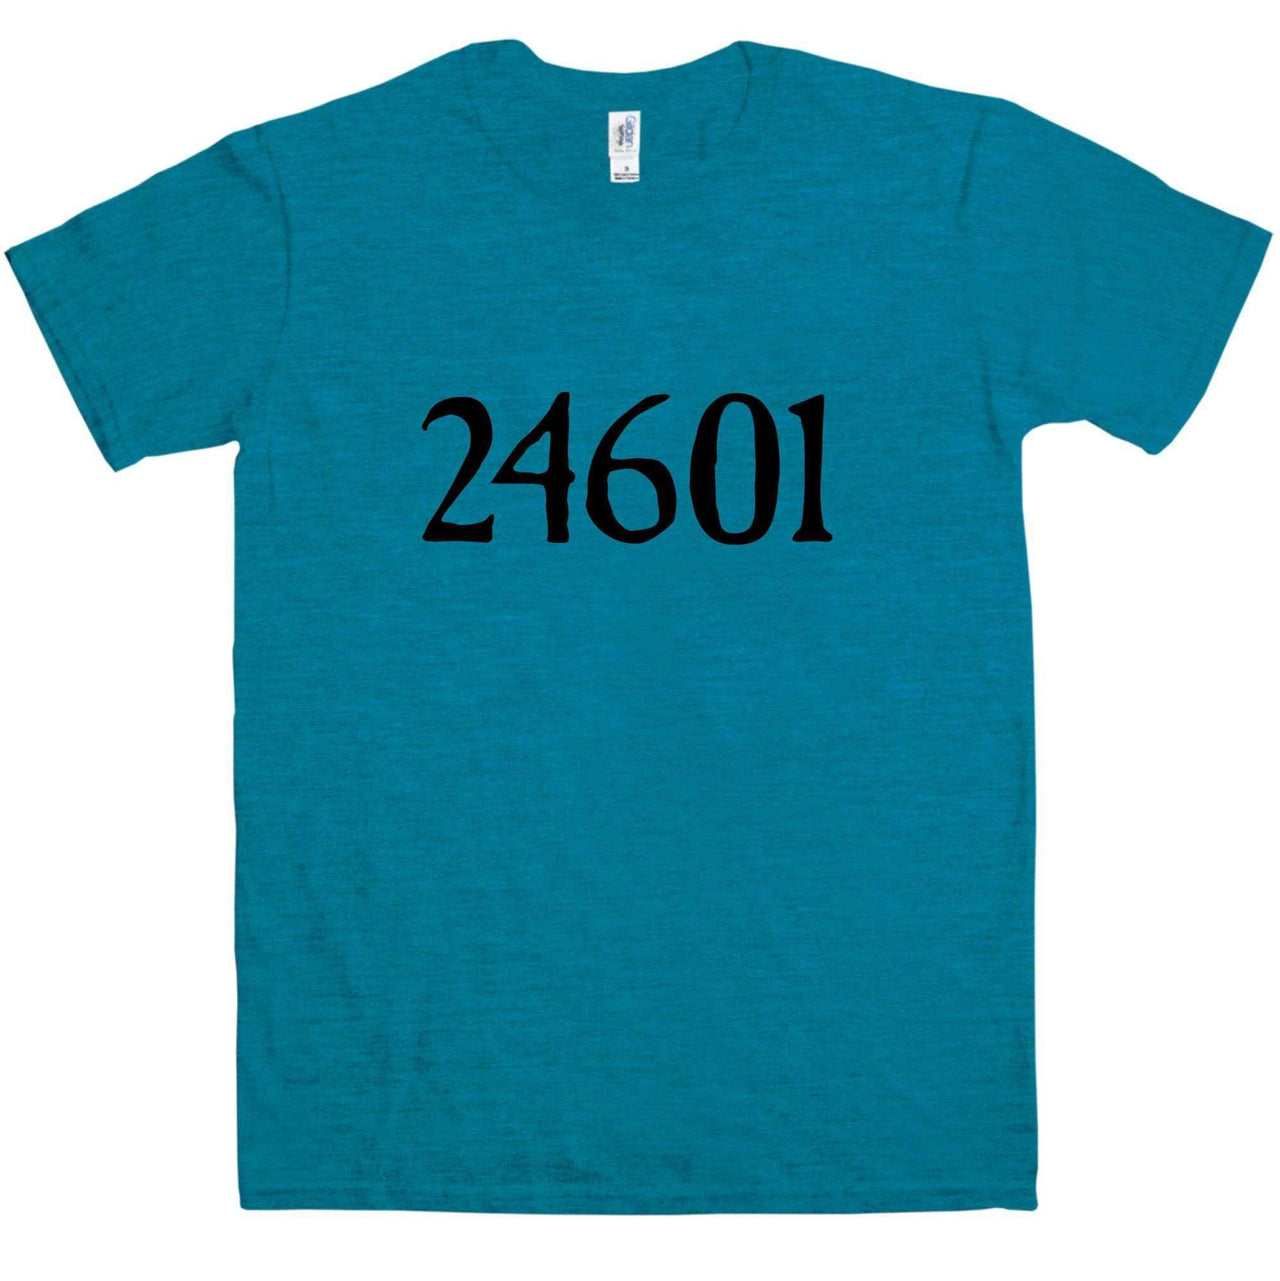 24601 Jean Valjean Prisoner Number Graphic T-Shirt For Men 8Ball